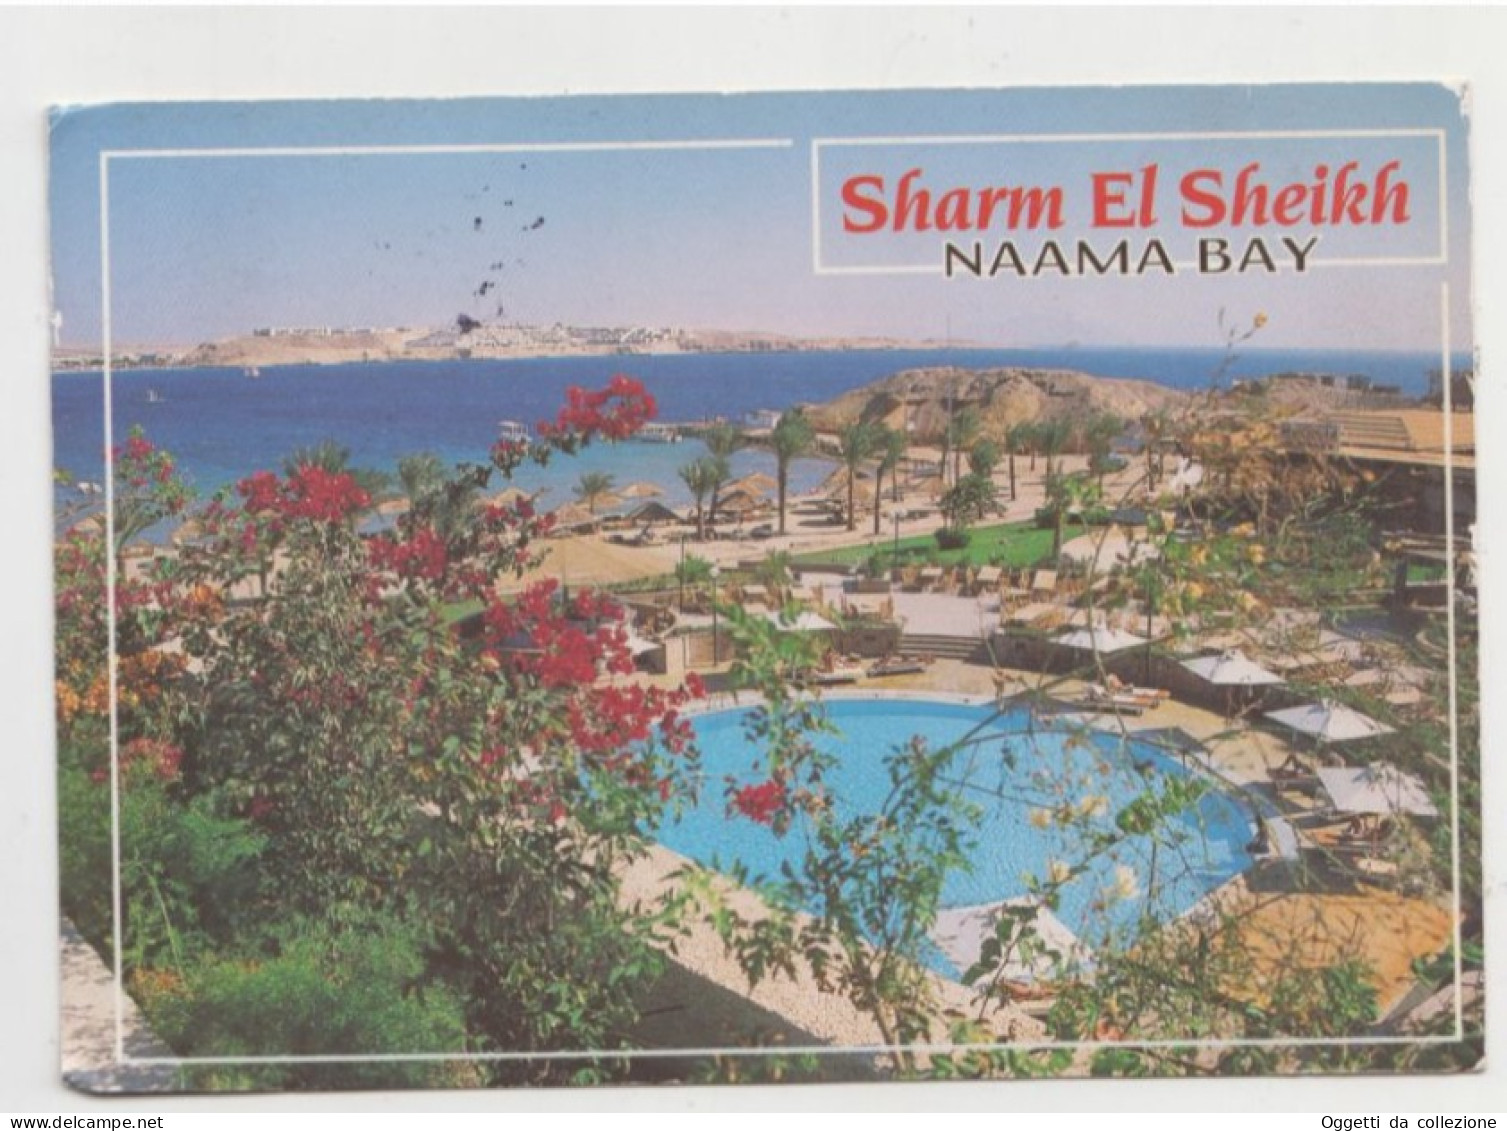 SKARM EL SHEIKK, Naama Bay  - Viaggiata  11/06/09 - (1366) - Sharm El Sheikh